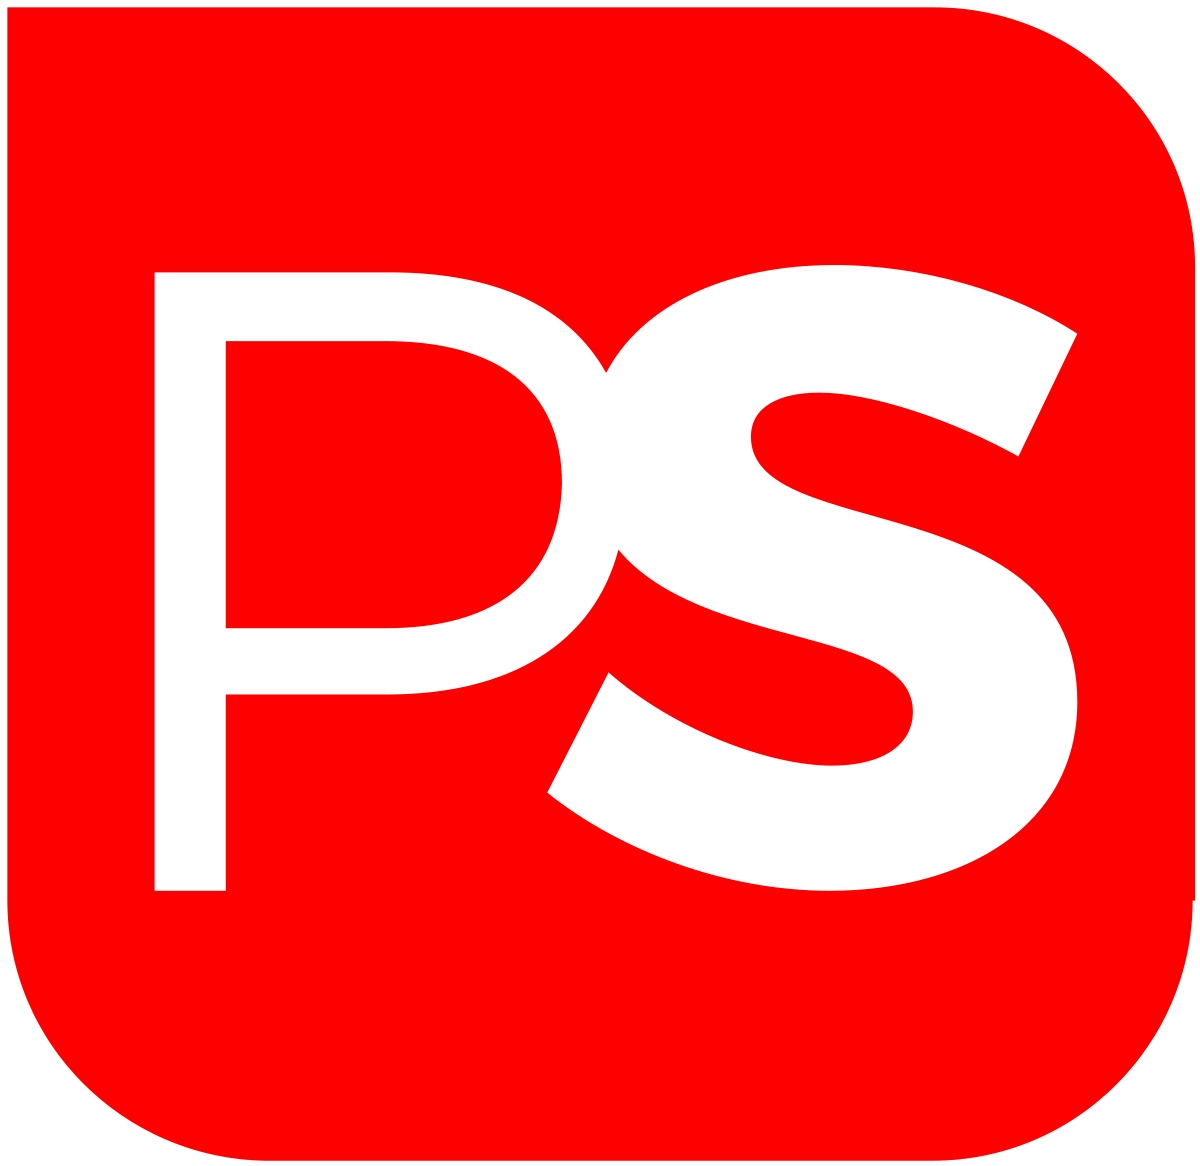 Socialist Party (Belgium) - Wikipedia